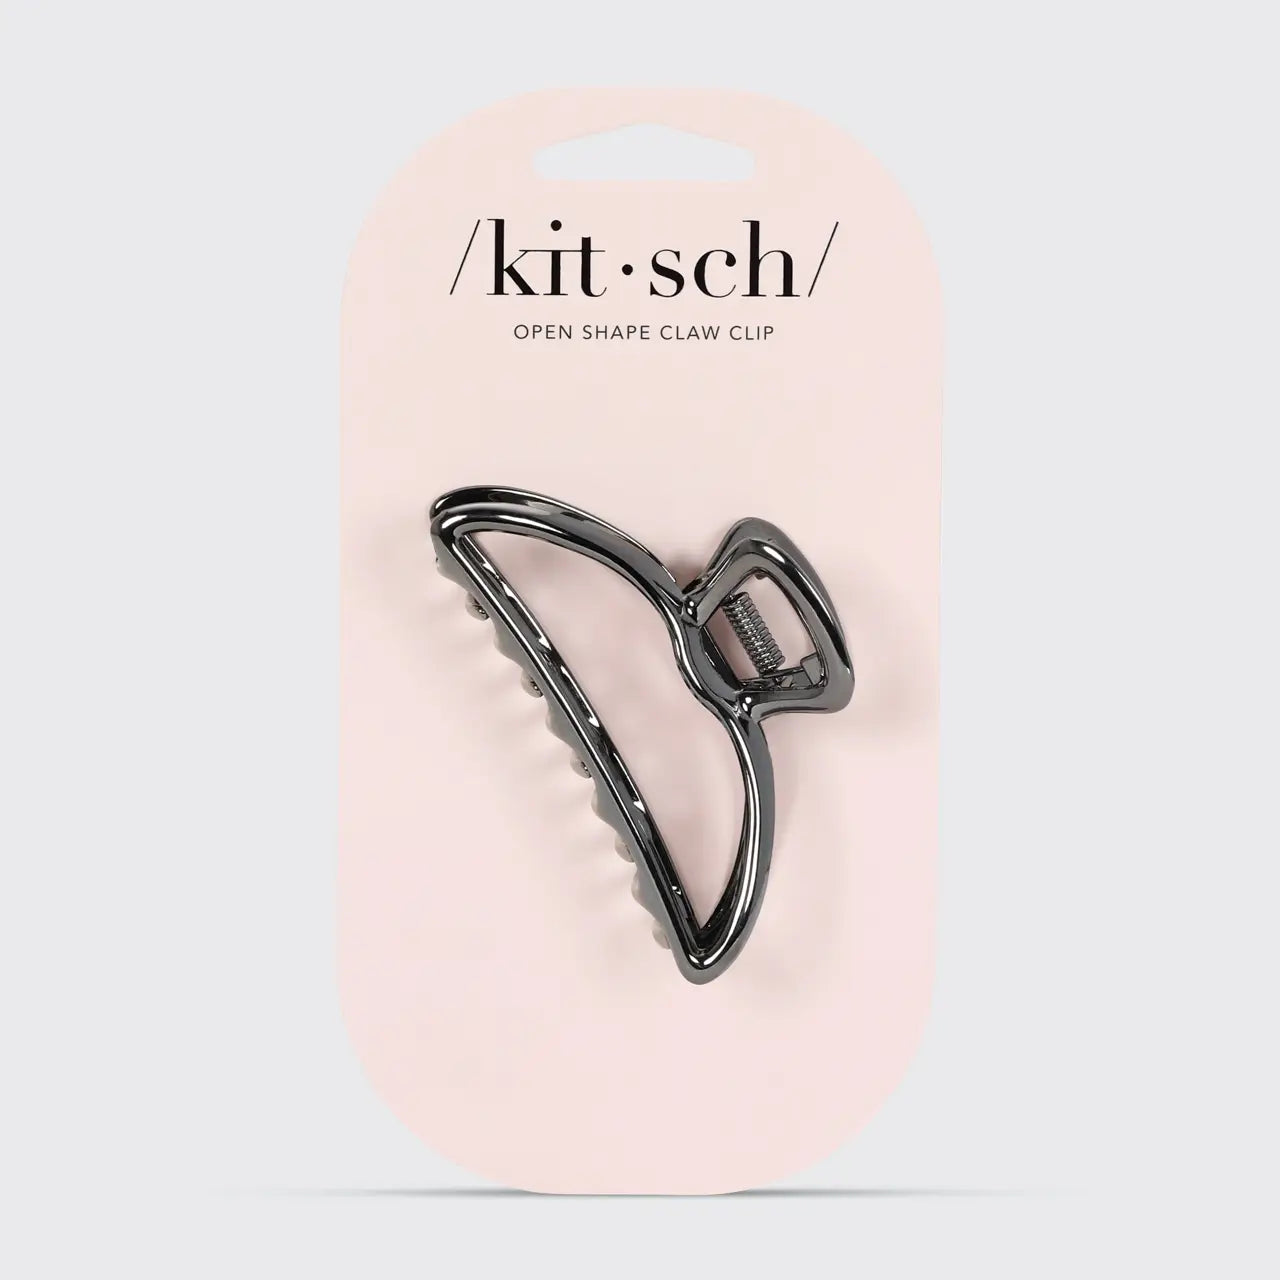 Kitsch Open Shape Claw Clips